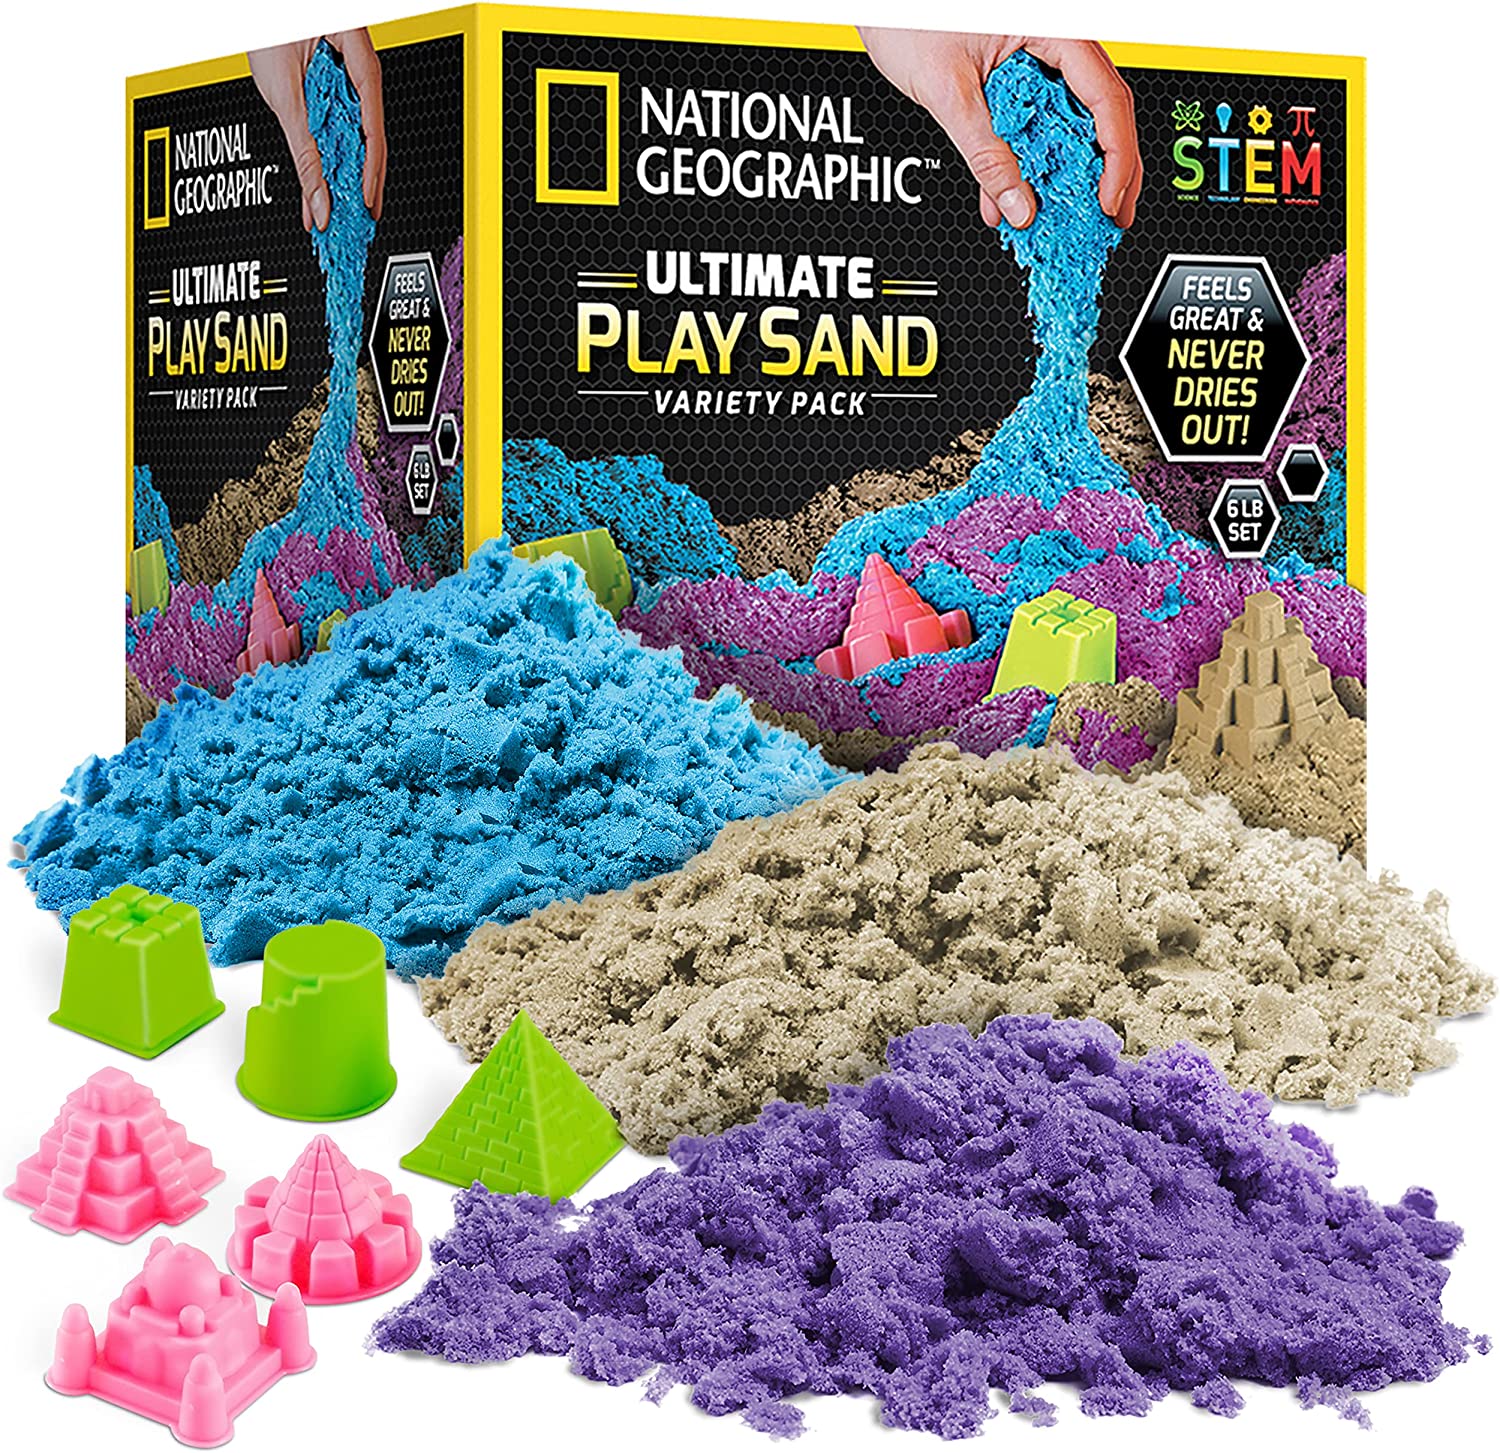 NATIONAL GEOGRAPHIC Play Sand - 24 LB Bulk Sand Kit